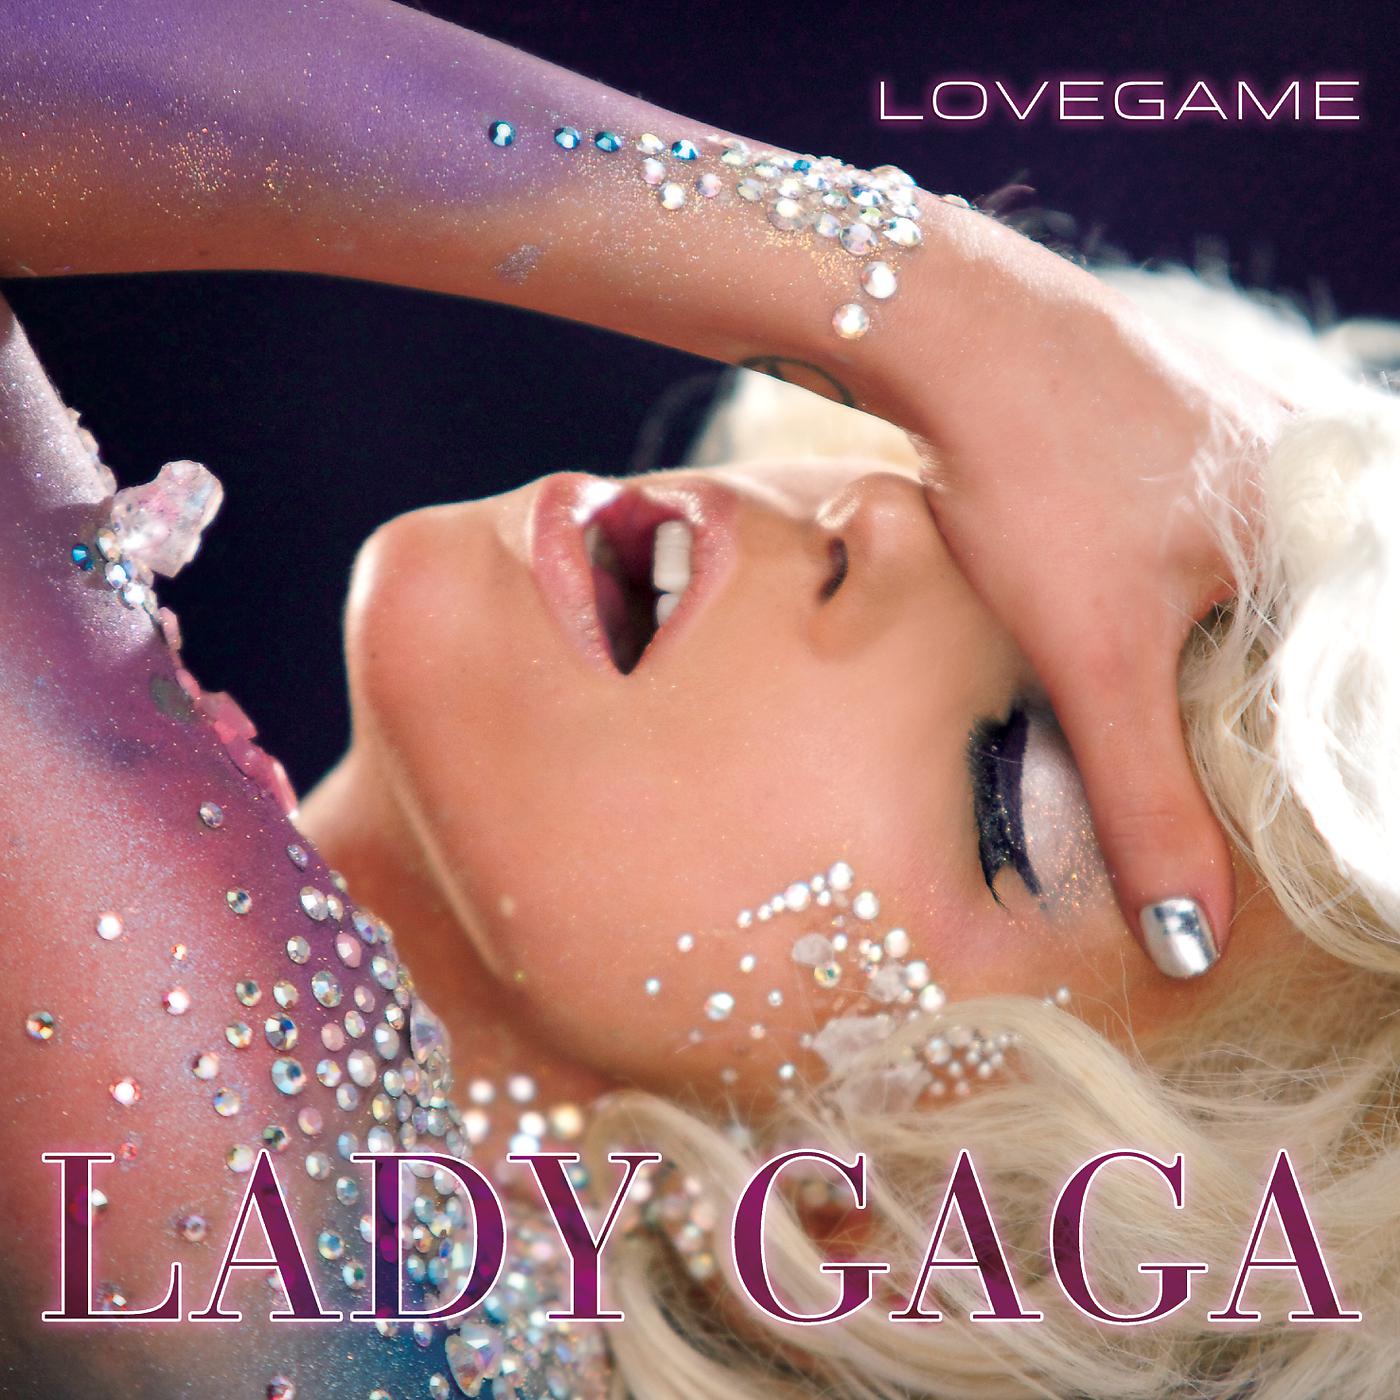 Леди гага game. Lady Gaga LOVEGAME обложка. LOVEGAME леди Гага. Lady Gaga Love game. LOVEGAME Lady Gaga альбом.